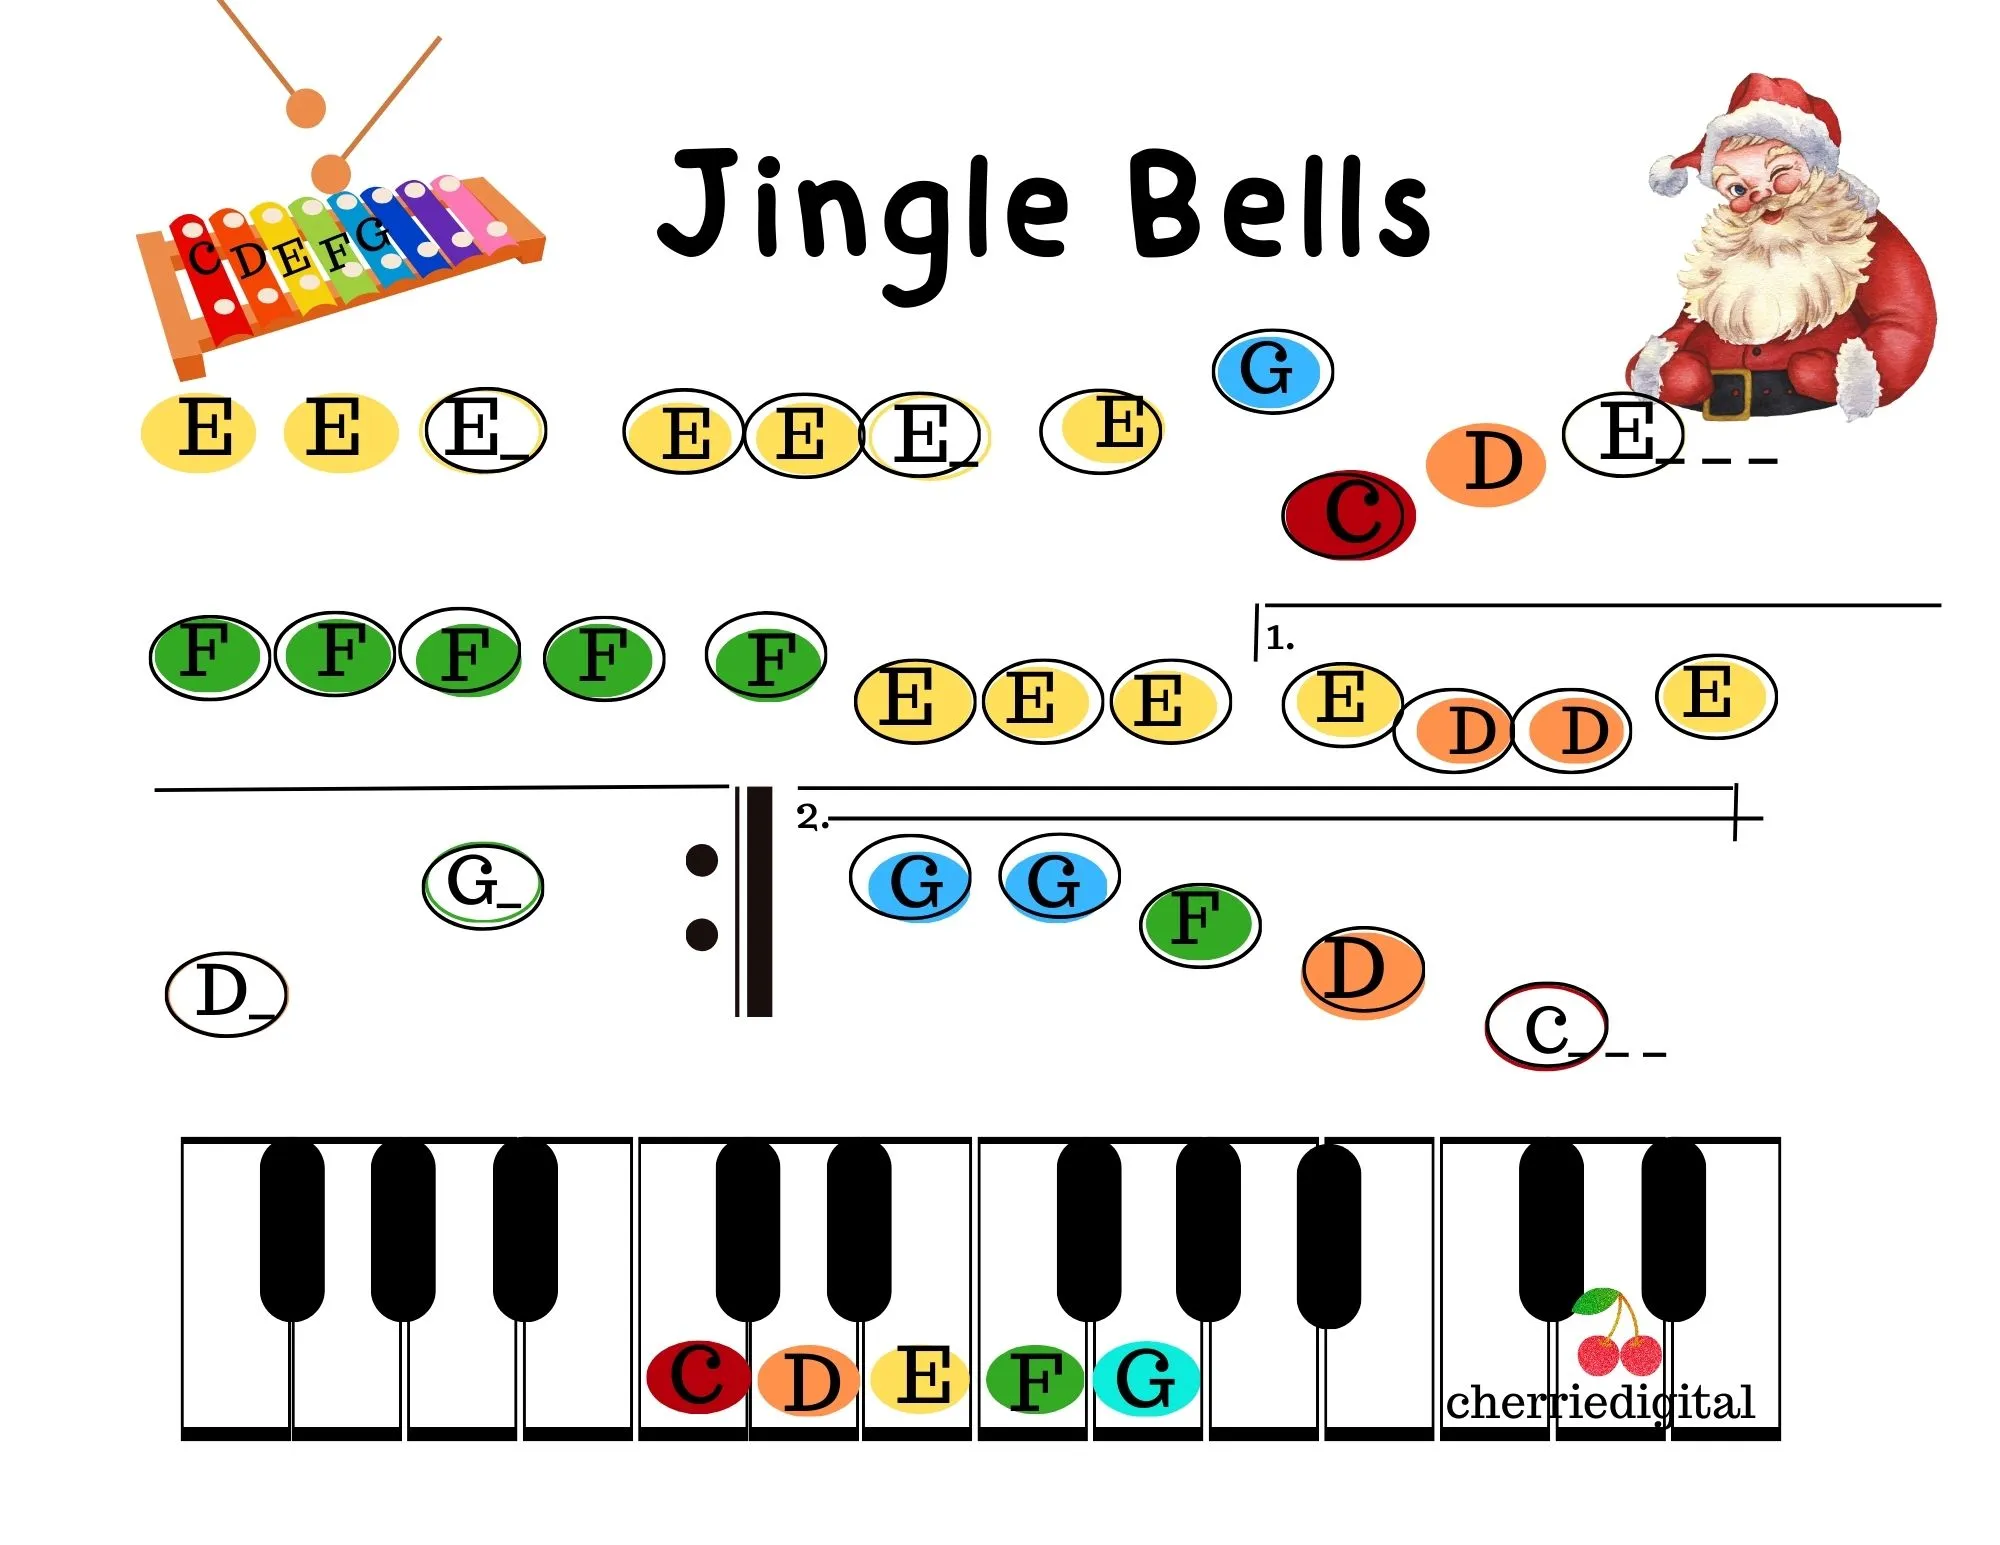 Jingle bells Refrain